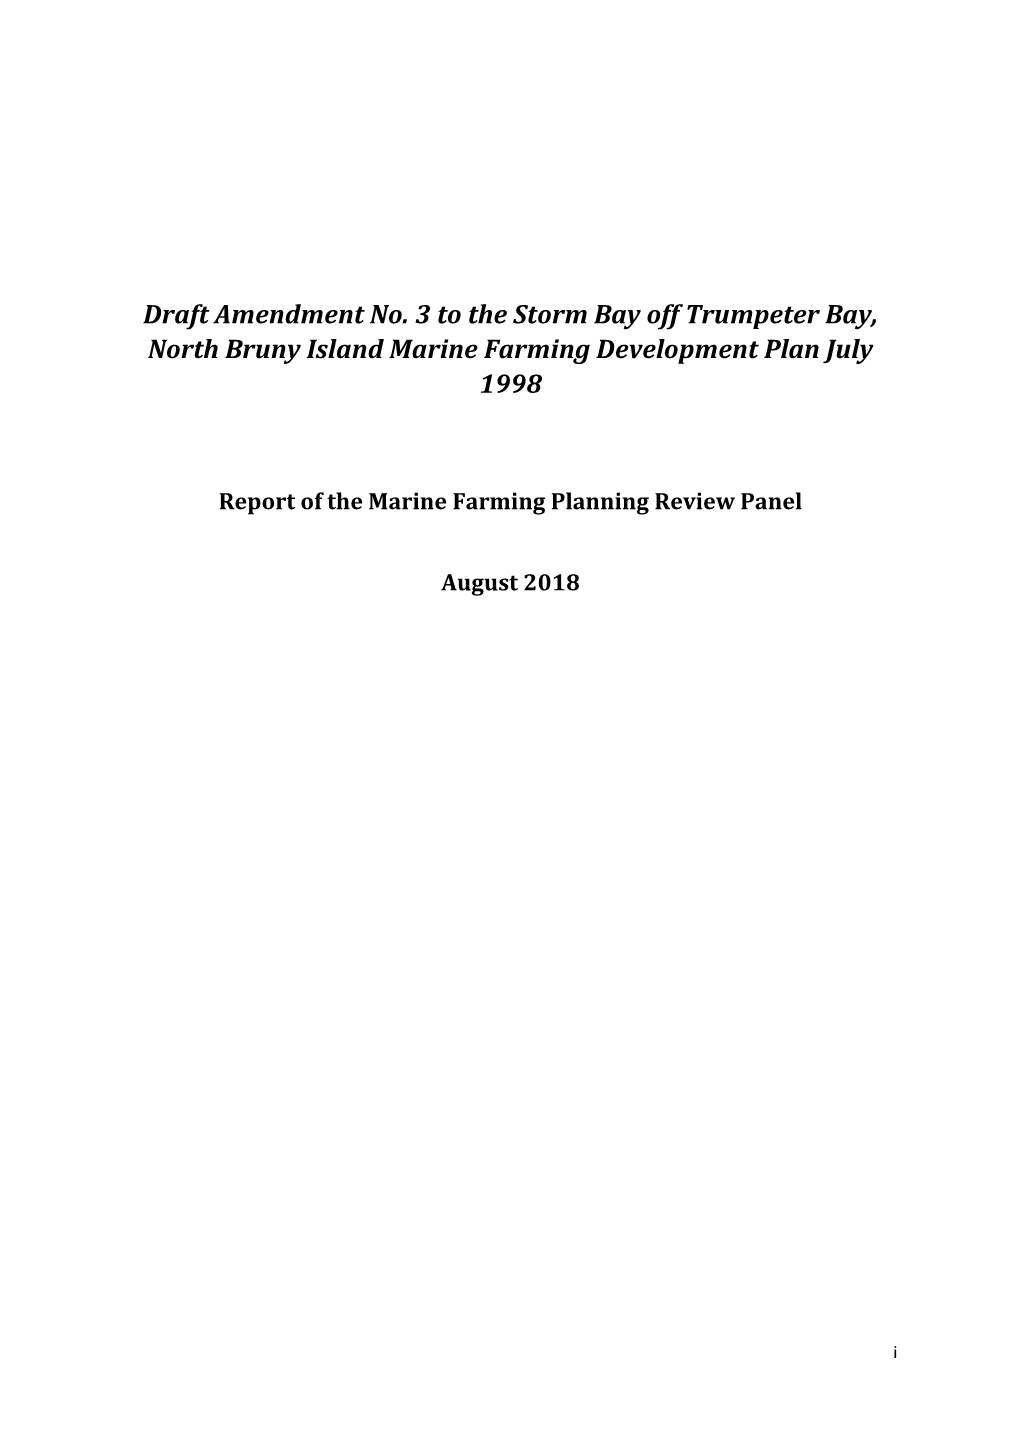 Draft Amendment No. 3 to the Storm Bay Off Trumpeter Bay, North Bruny Island Marine Farming Development Plan July 1998